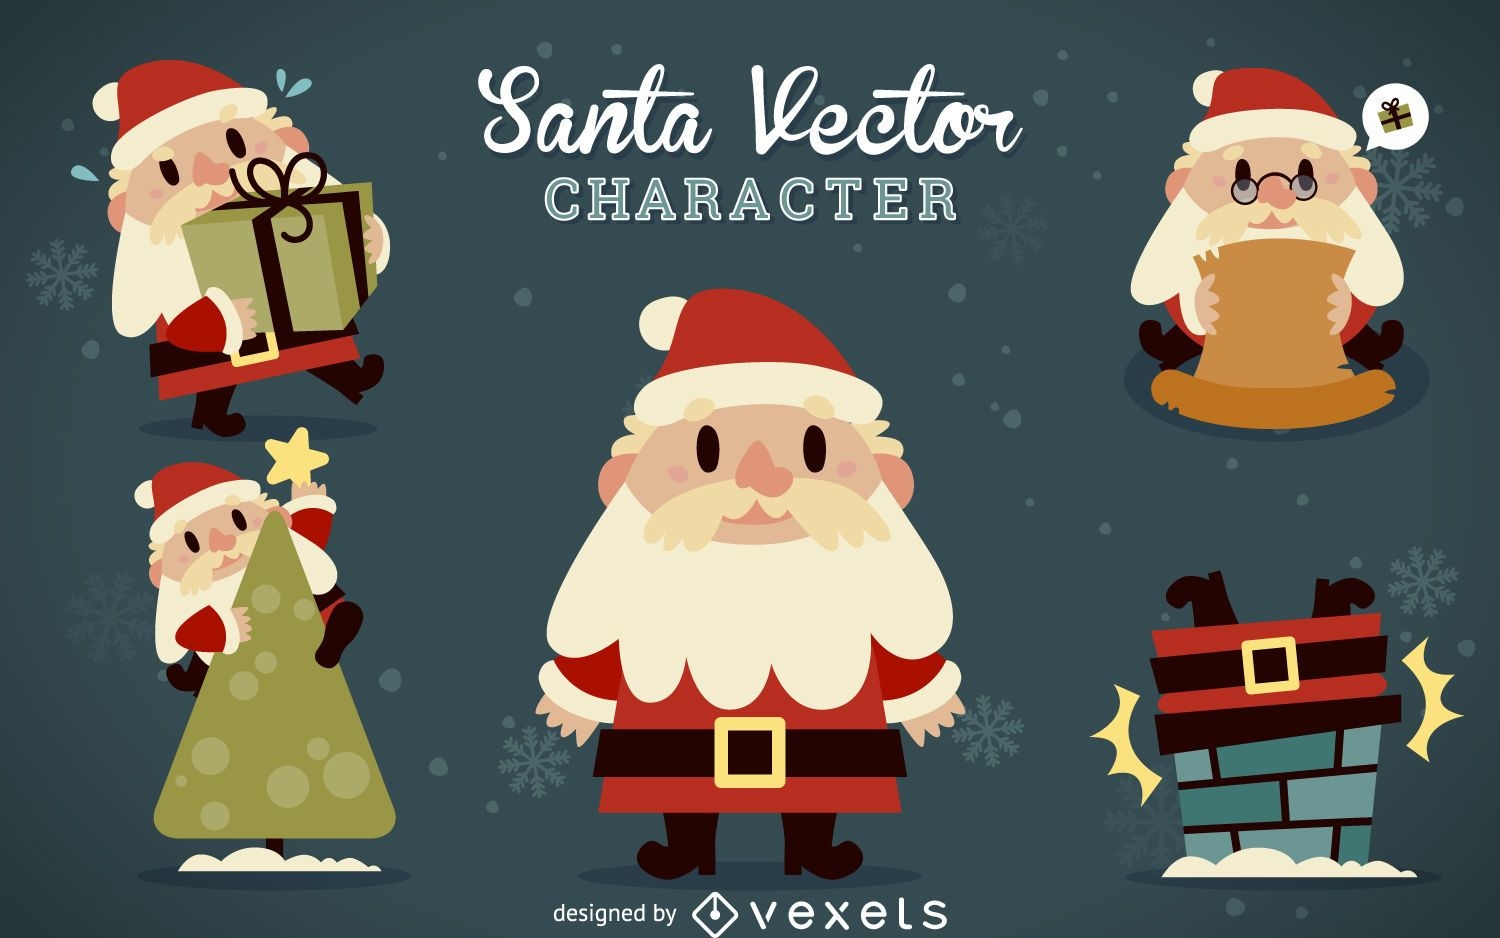 Dibujos animados planos de Santa Claus